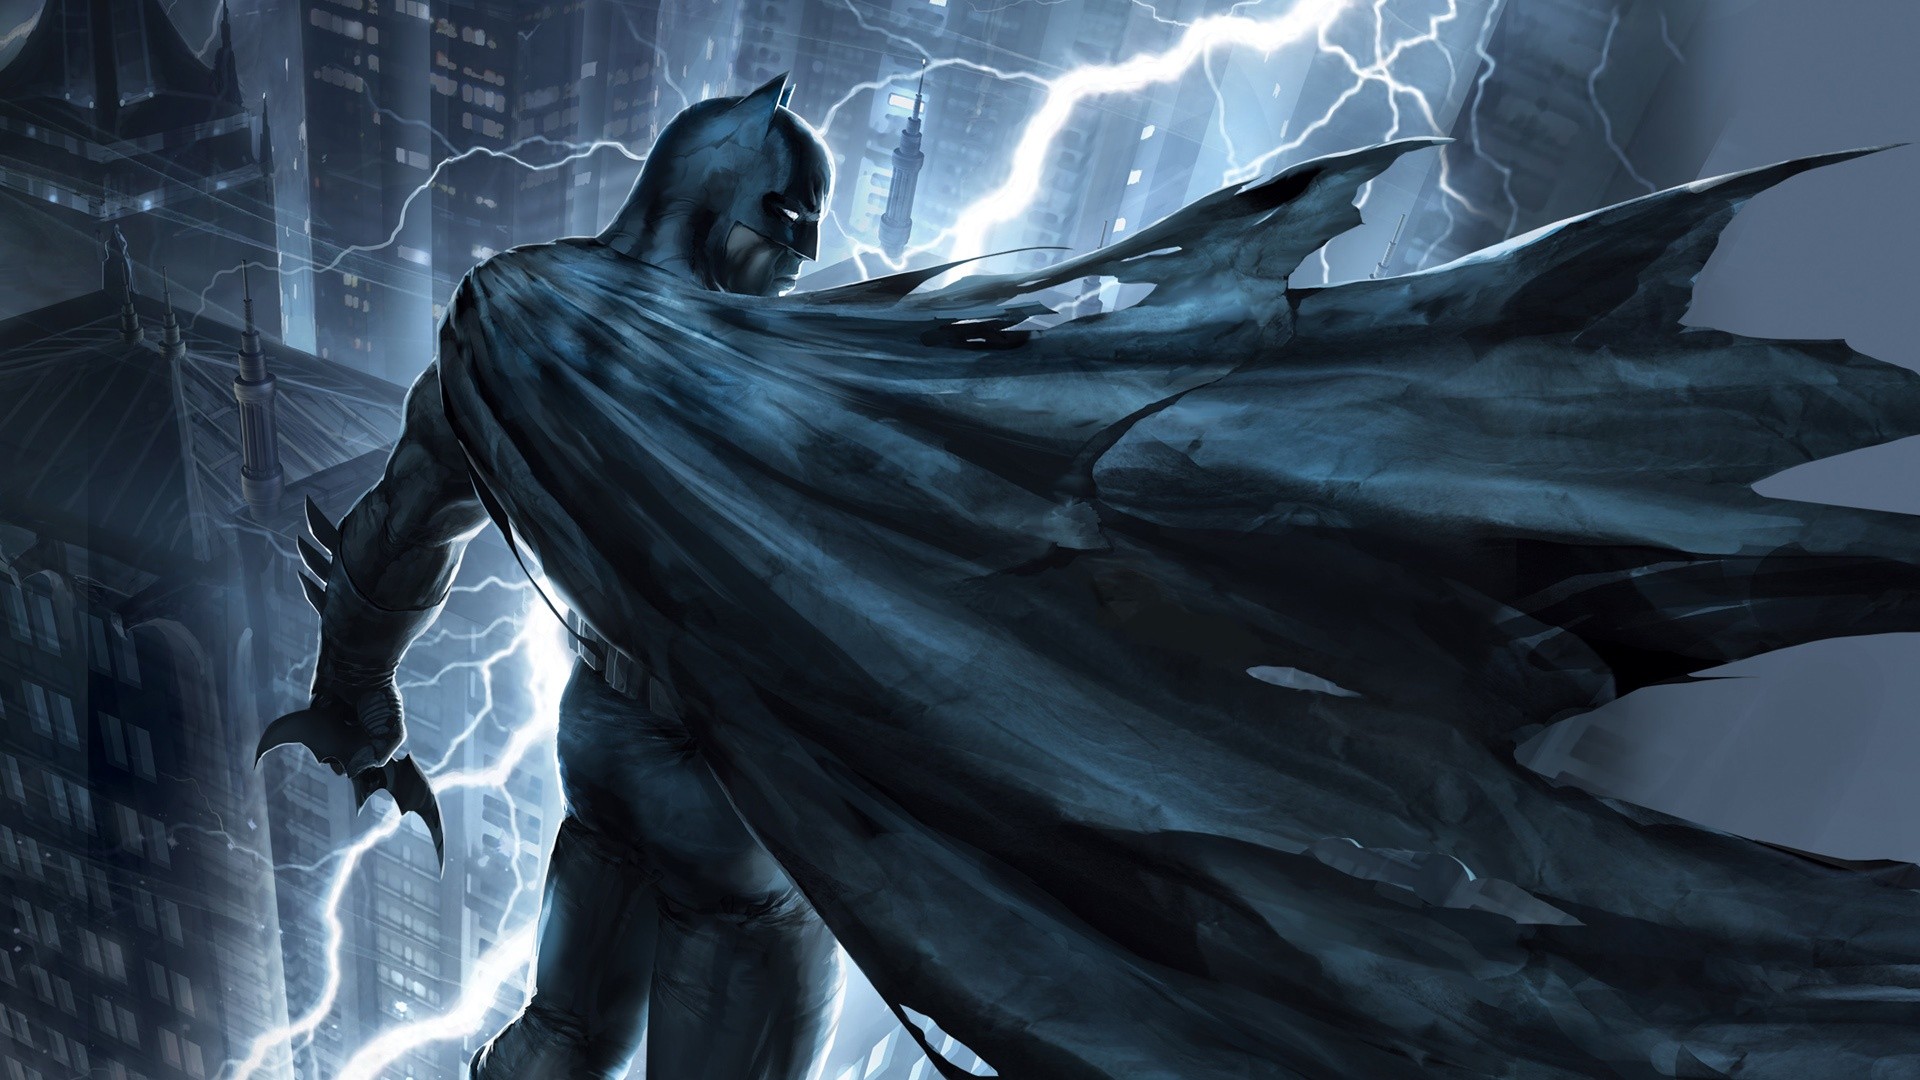 Movie Batman: The Dark Knight Returns HD Wallpaper | Background Image